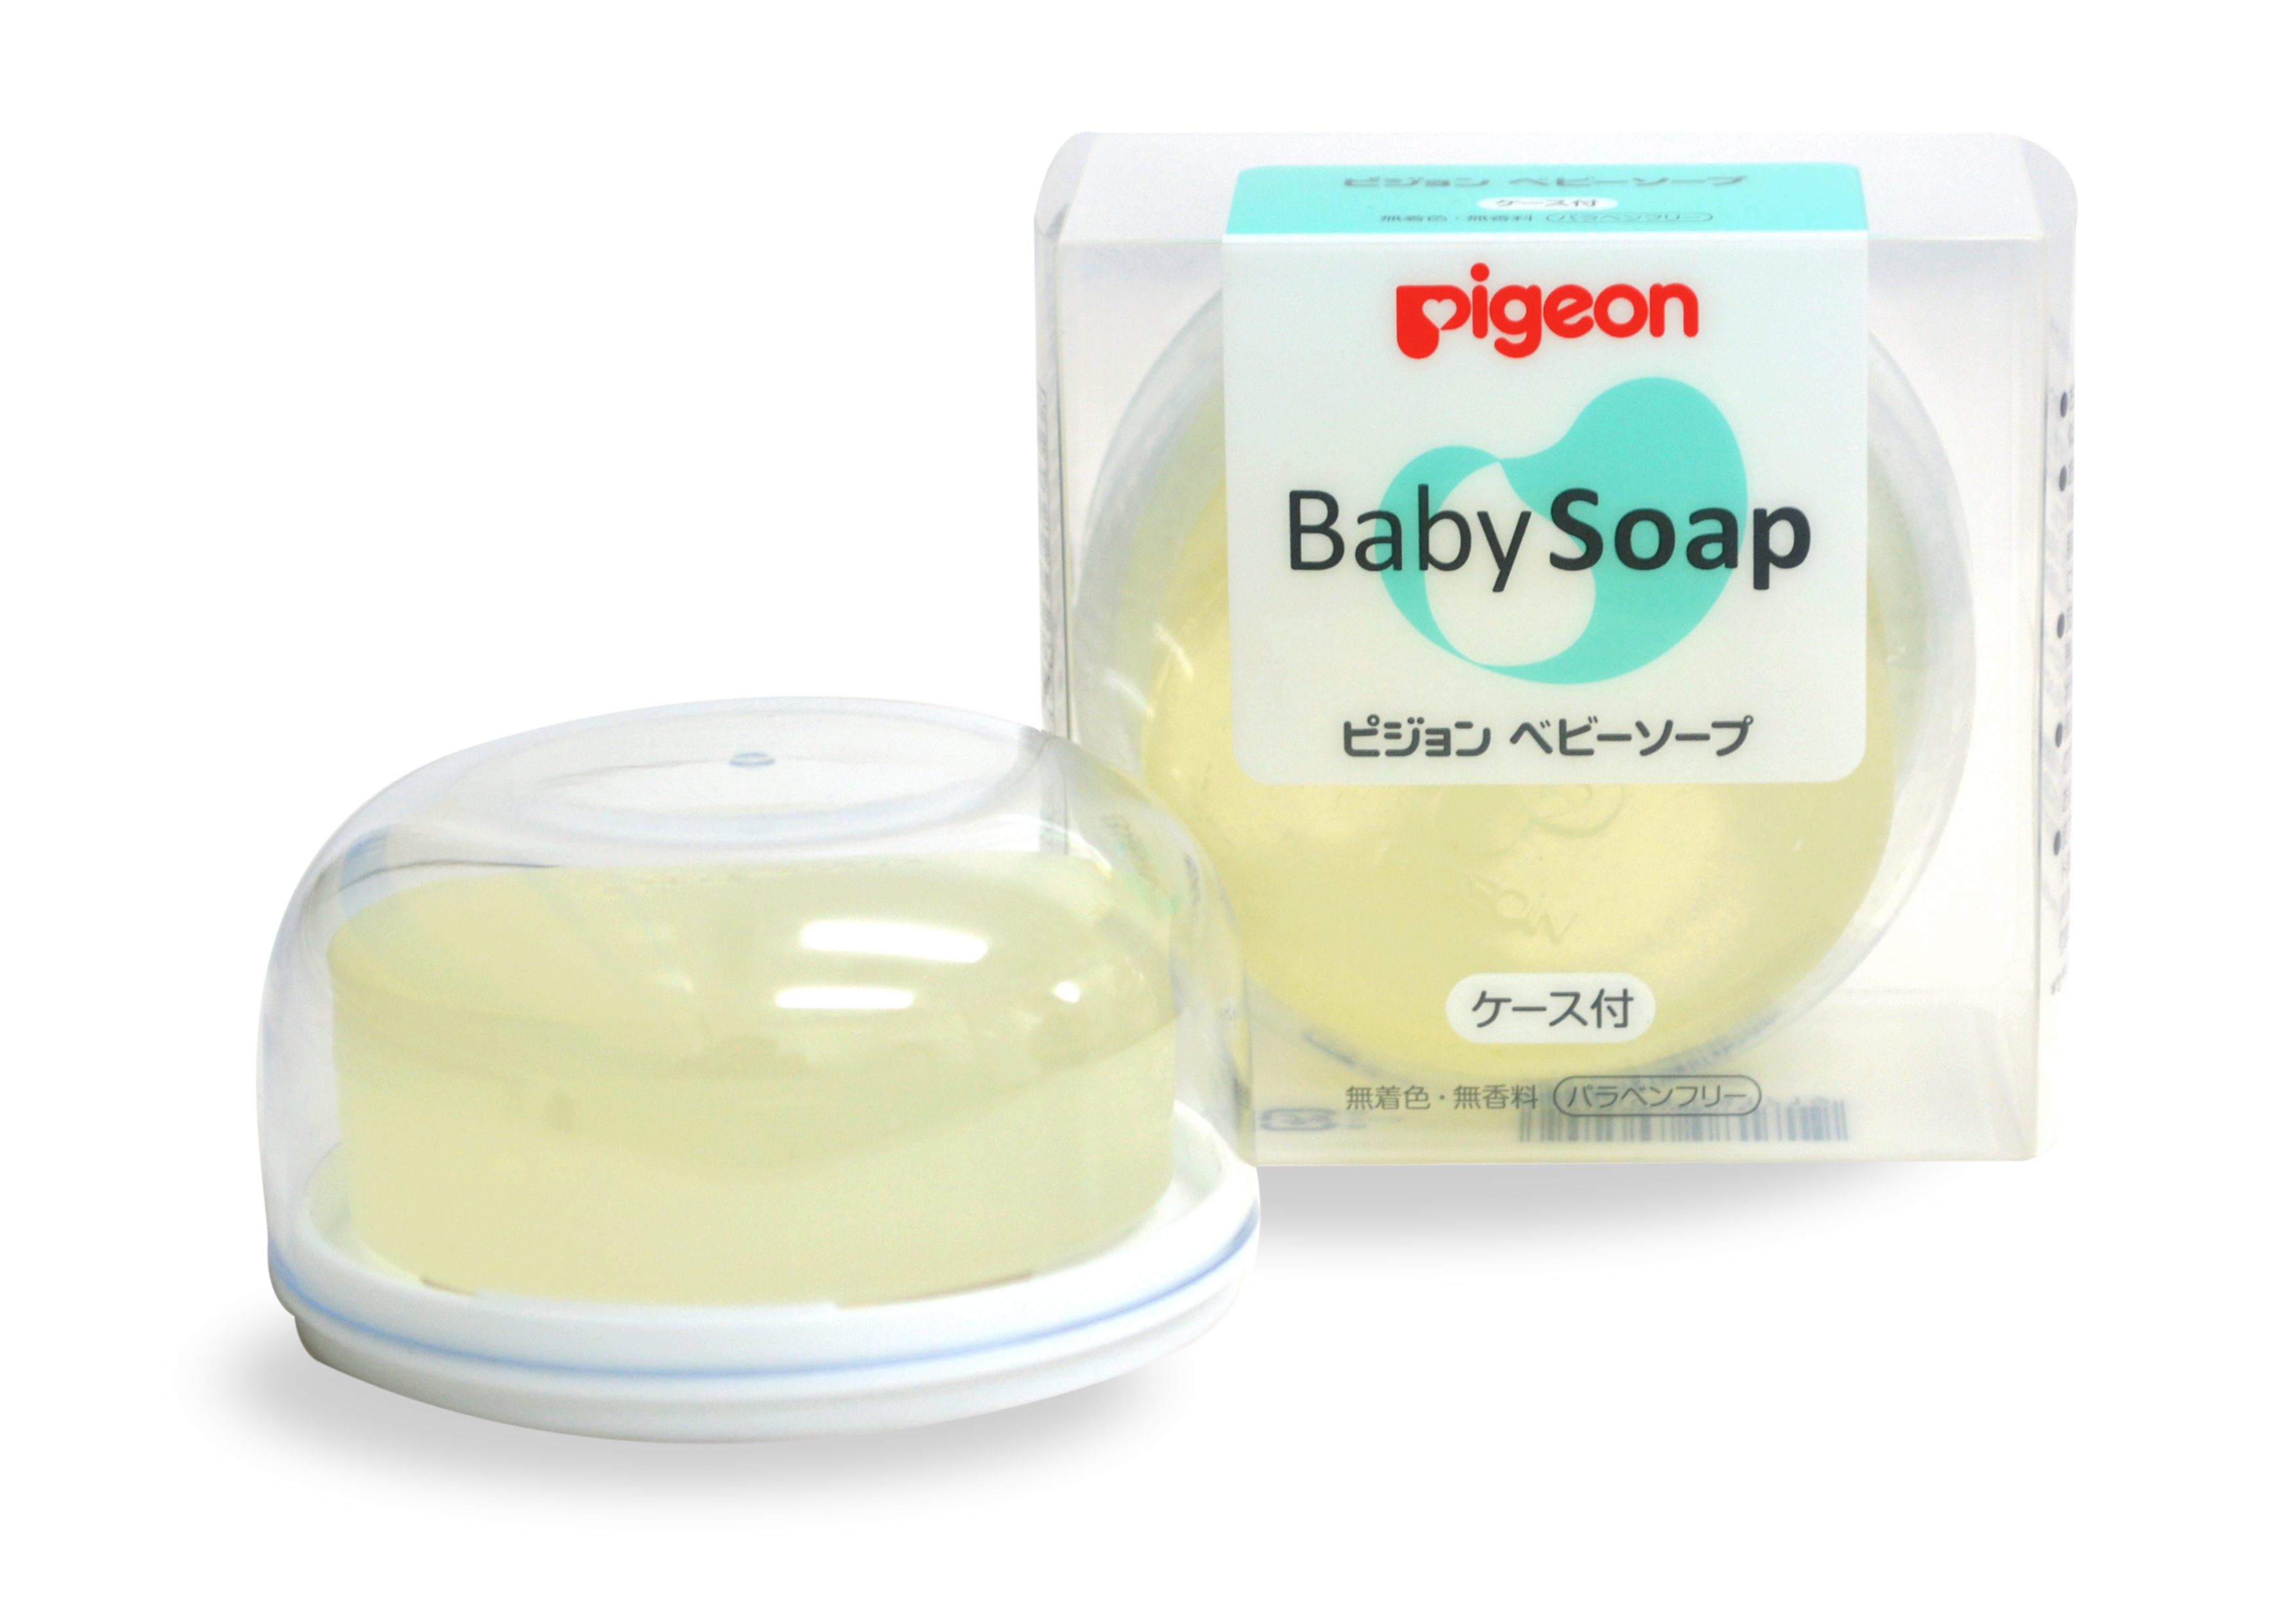 BABY TRANSPARENT SOAP W/CASE, 80G - Pigeon